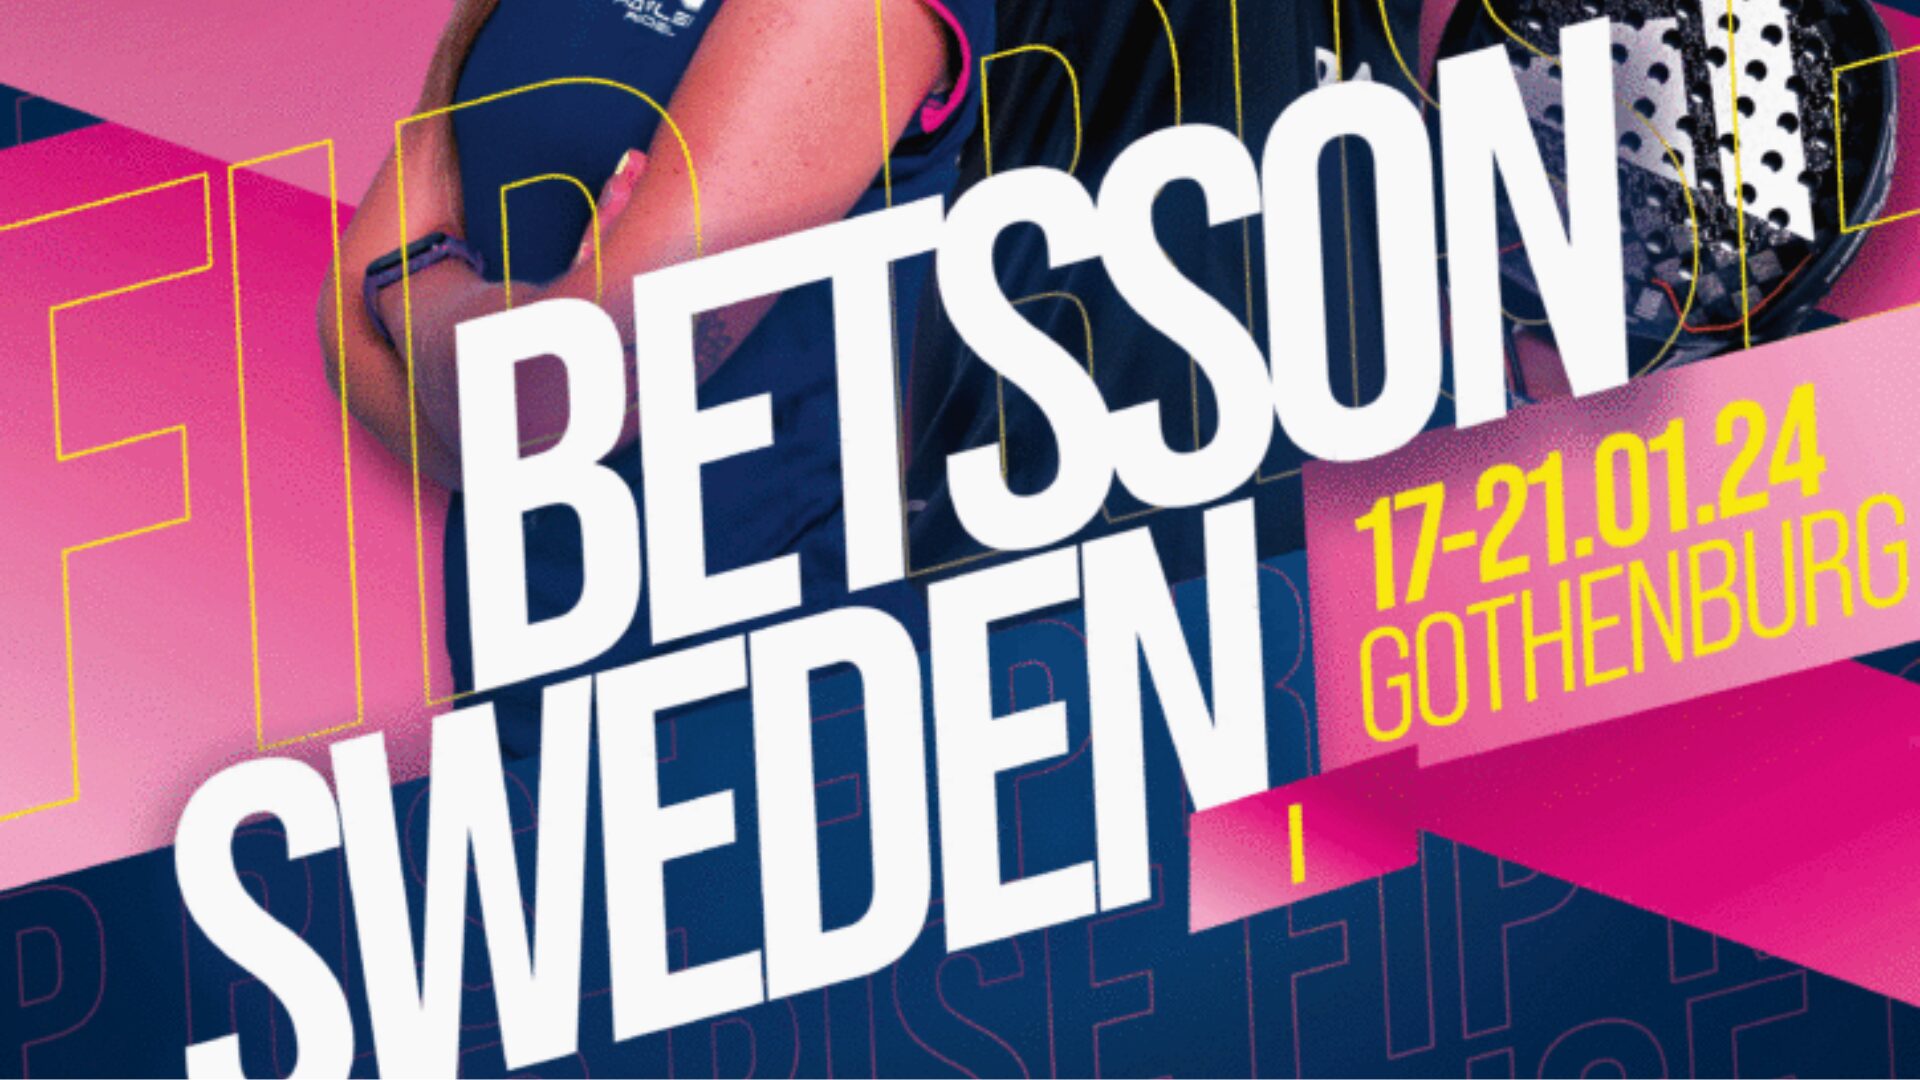 Betsson Suècia FIP Ascens gener 2024 Göteborg